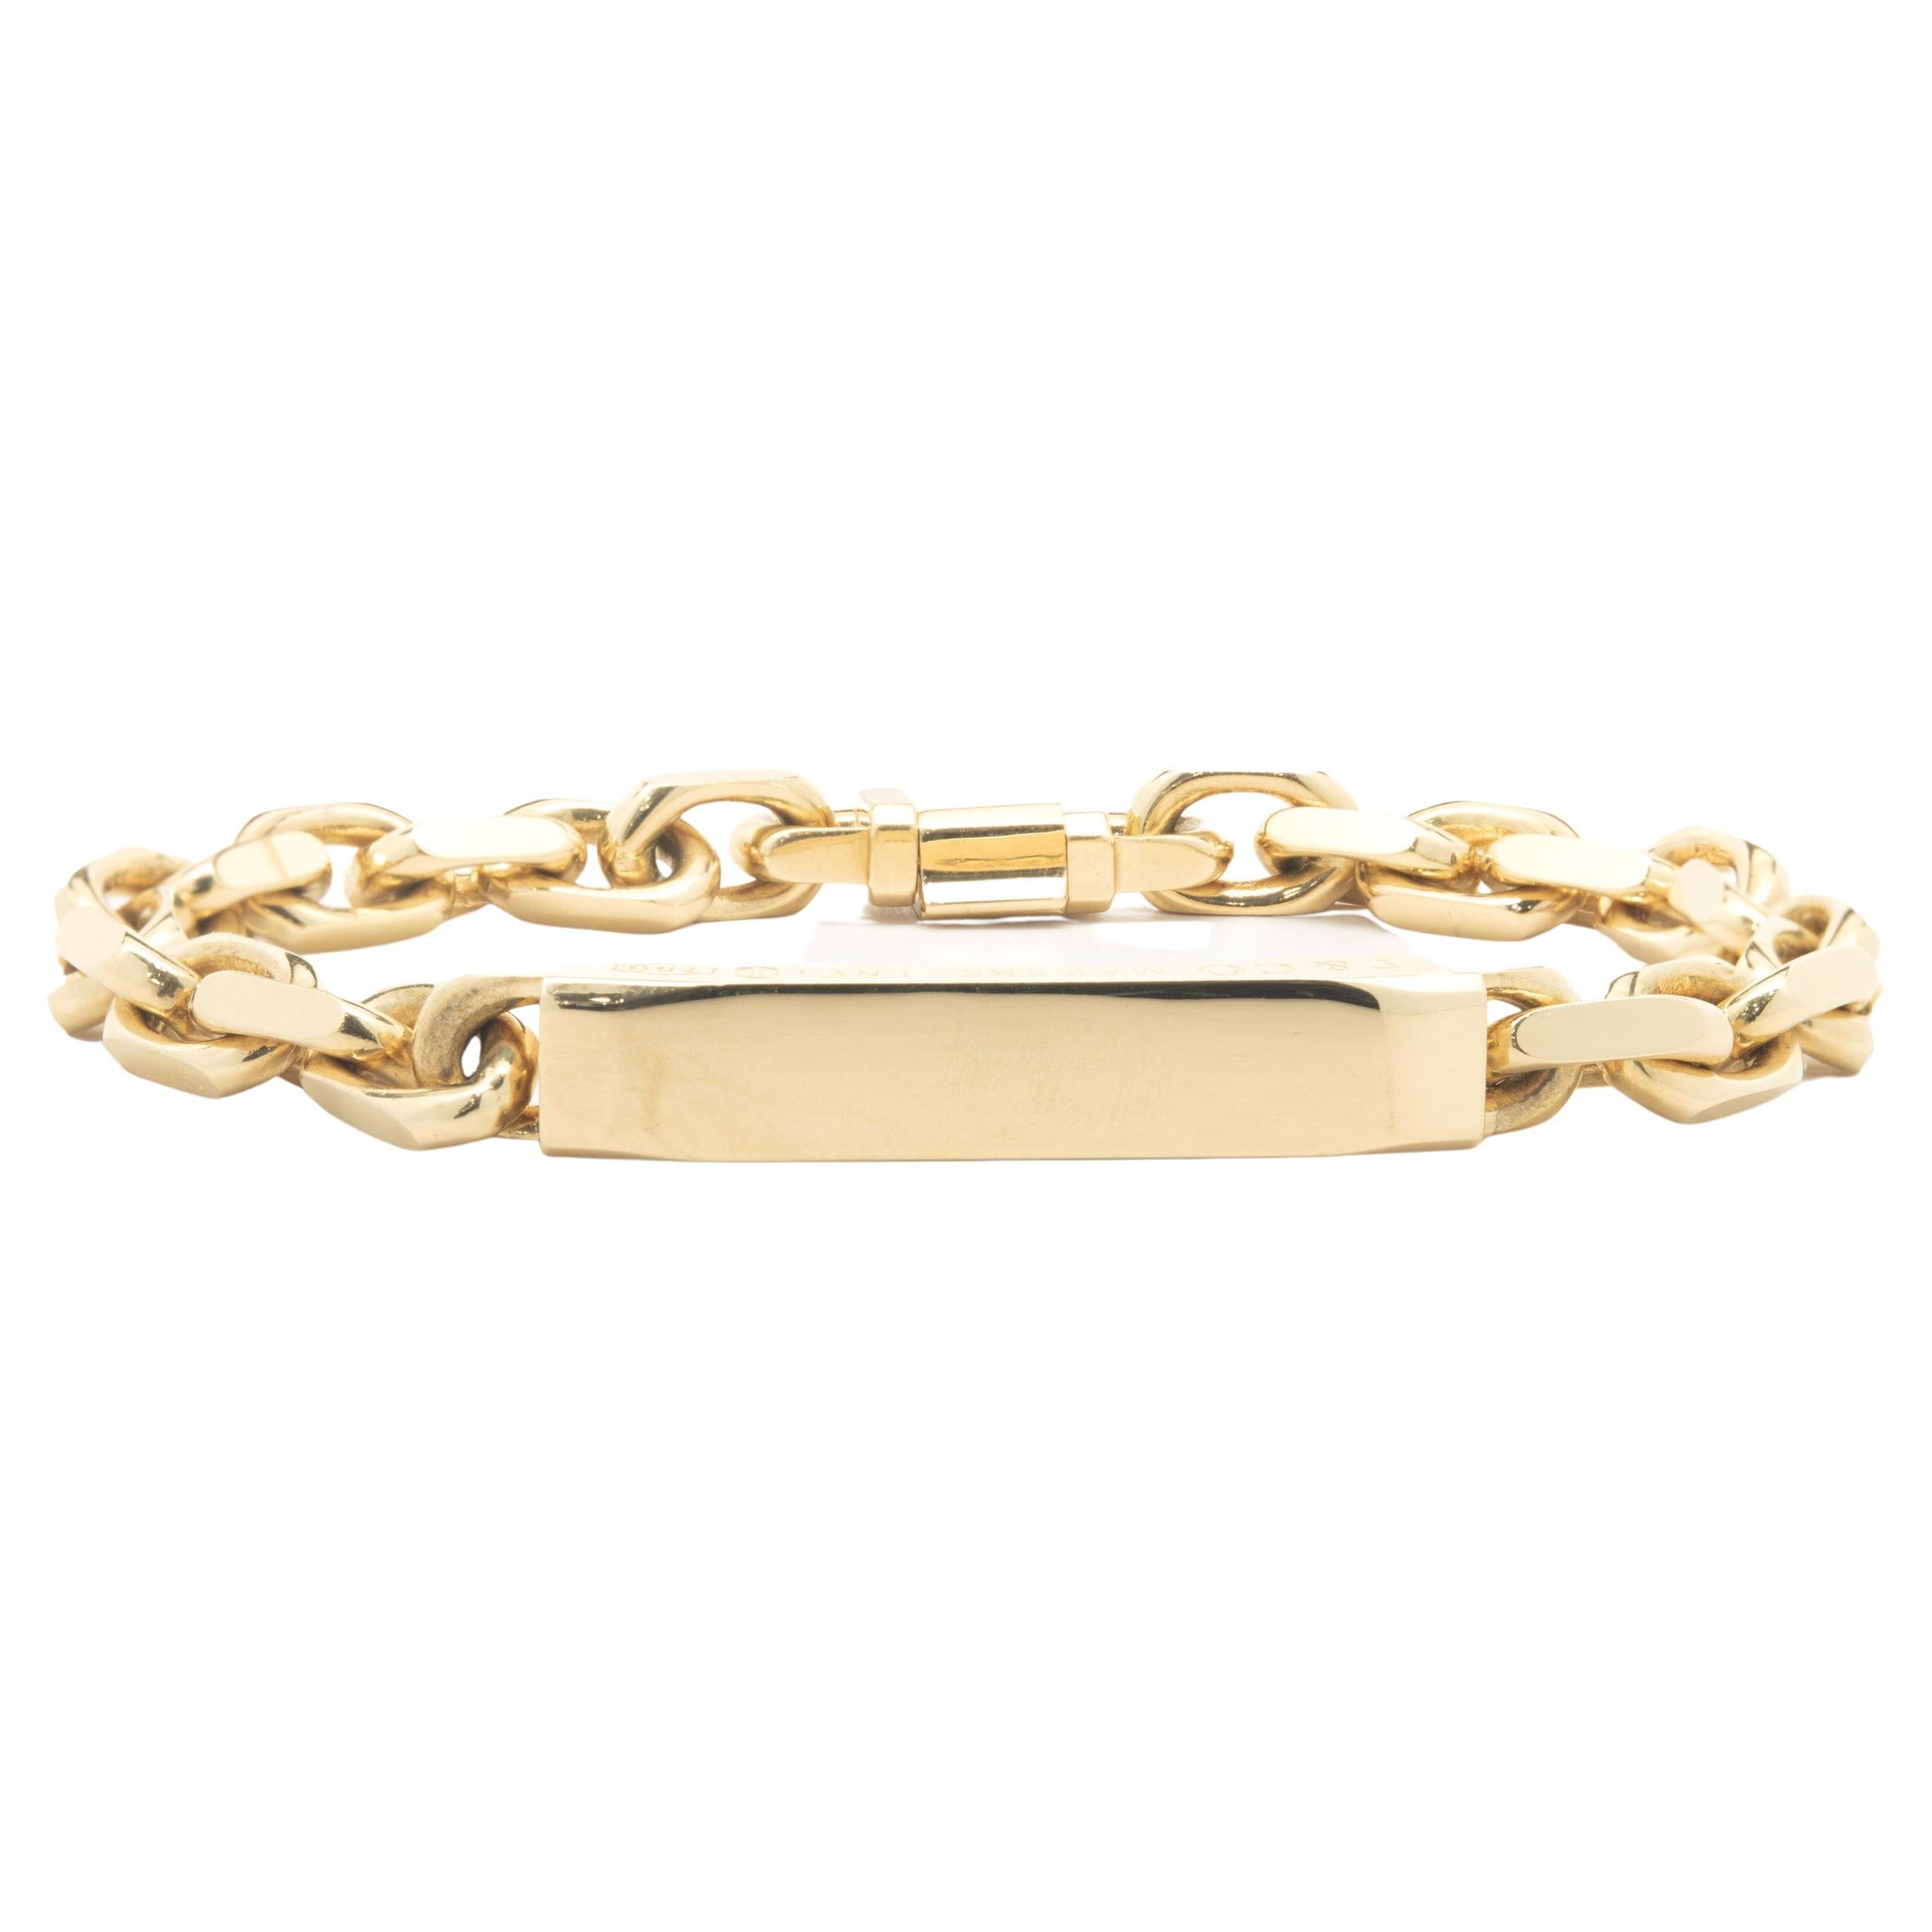 Tiffany & Co. 18 Karat Yellow Gold ID Bracelet